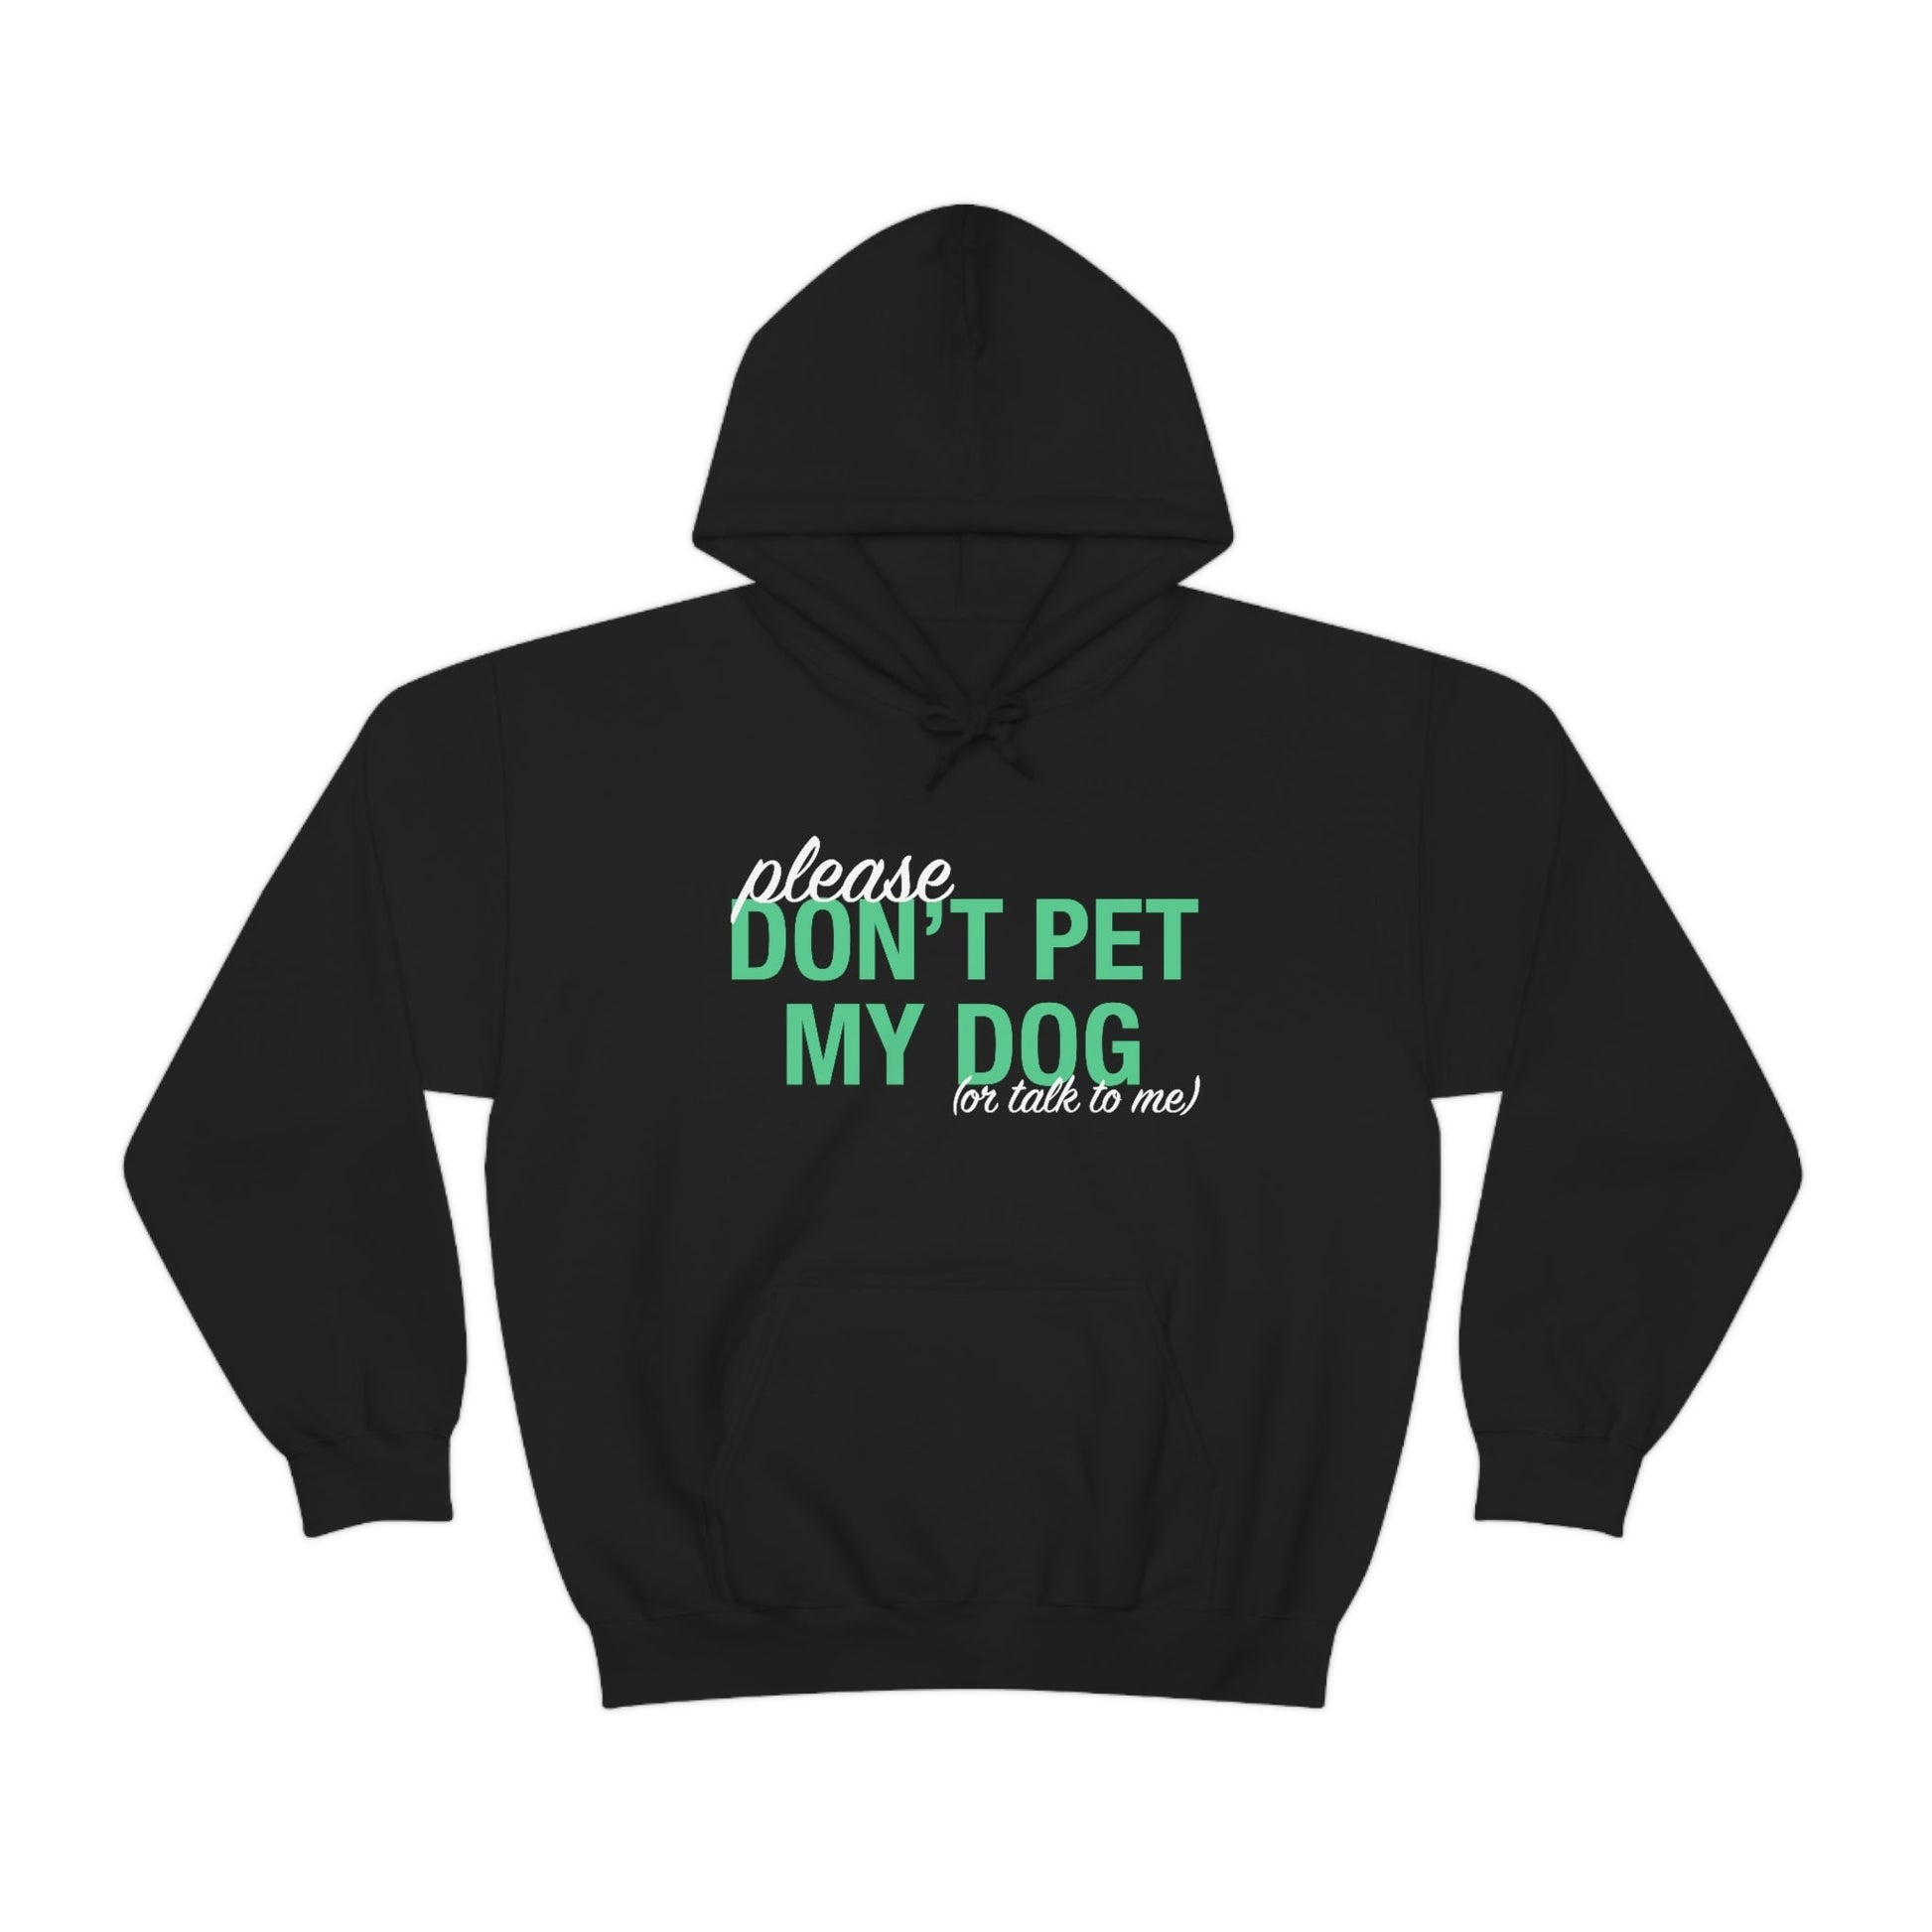 Please Don't Pet My Dog (Or Talk To Me) | Hooded Sweatshirt - Detezi Designs-28180178126553224982